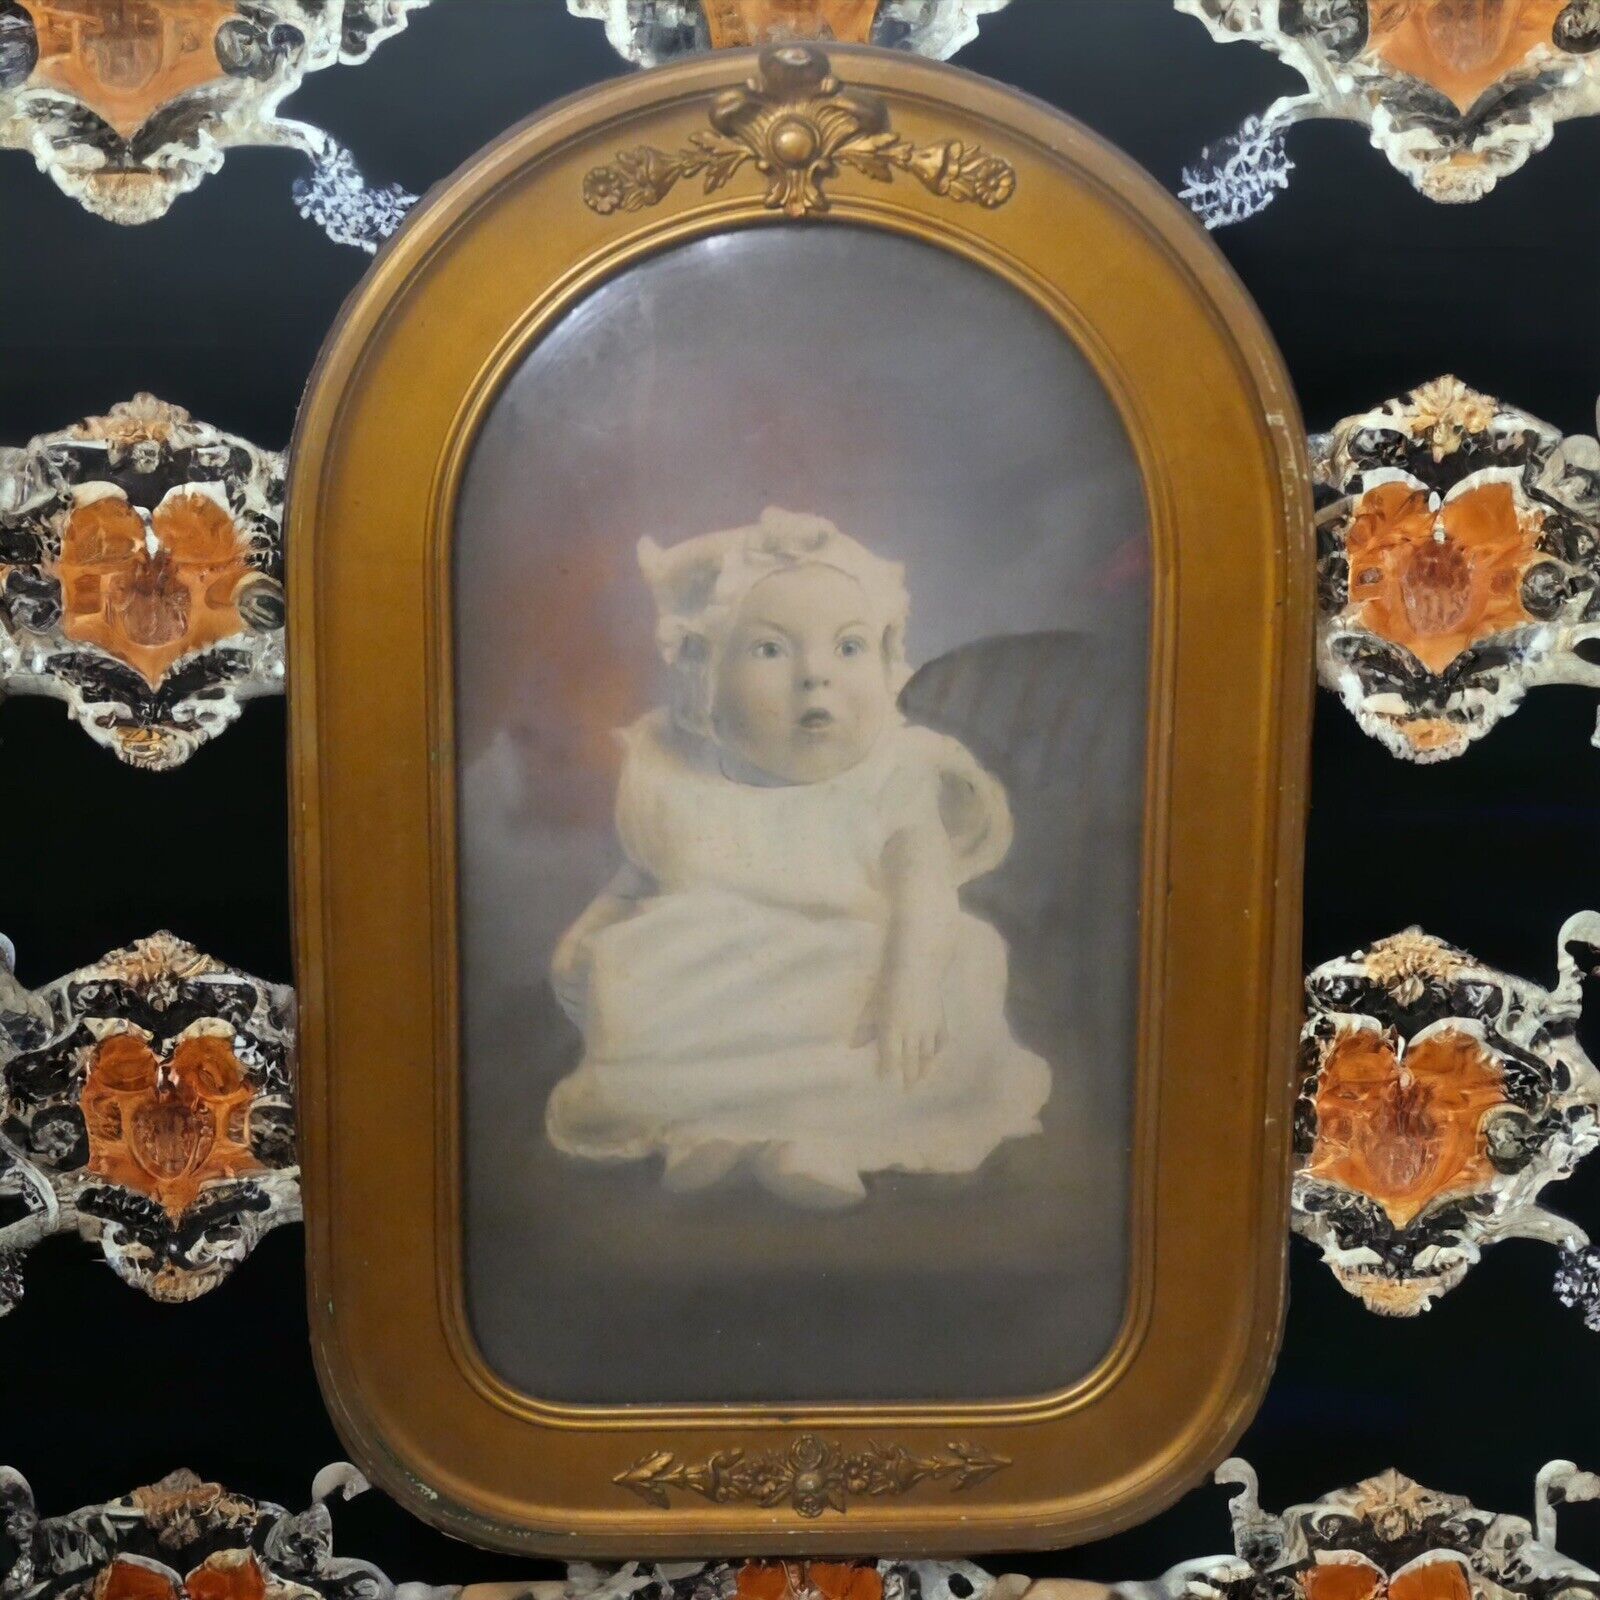 Circa 1900 American Victorian Baby Portrait Photograph in Convex Glass Frame